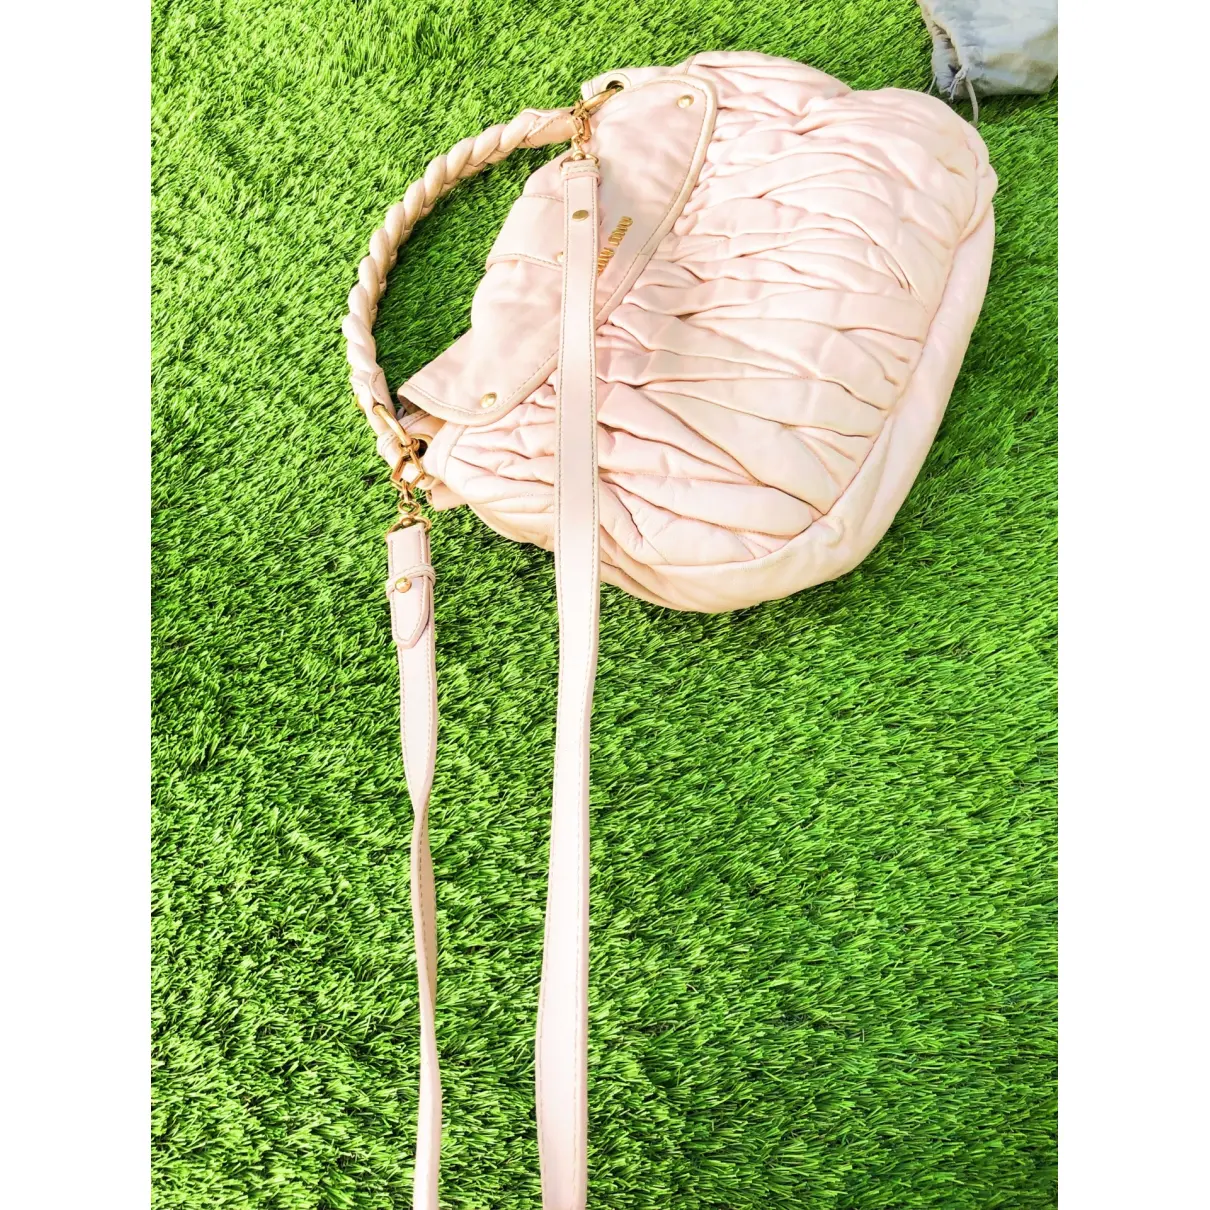 Coffer leather handbag Miu Miu